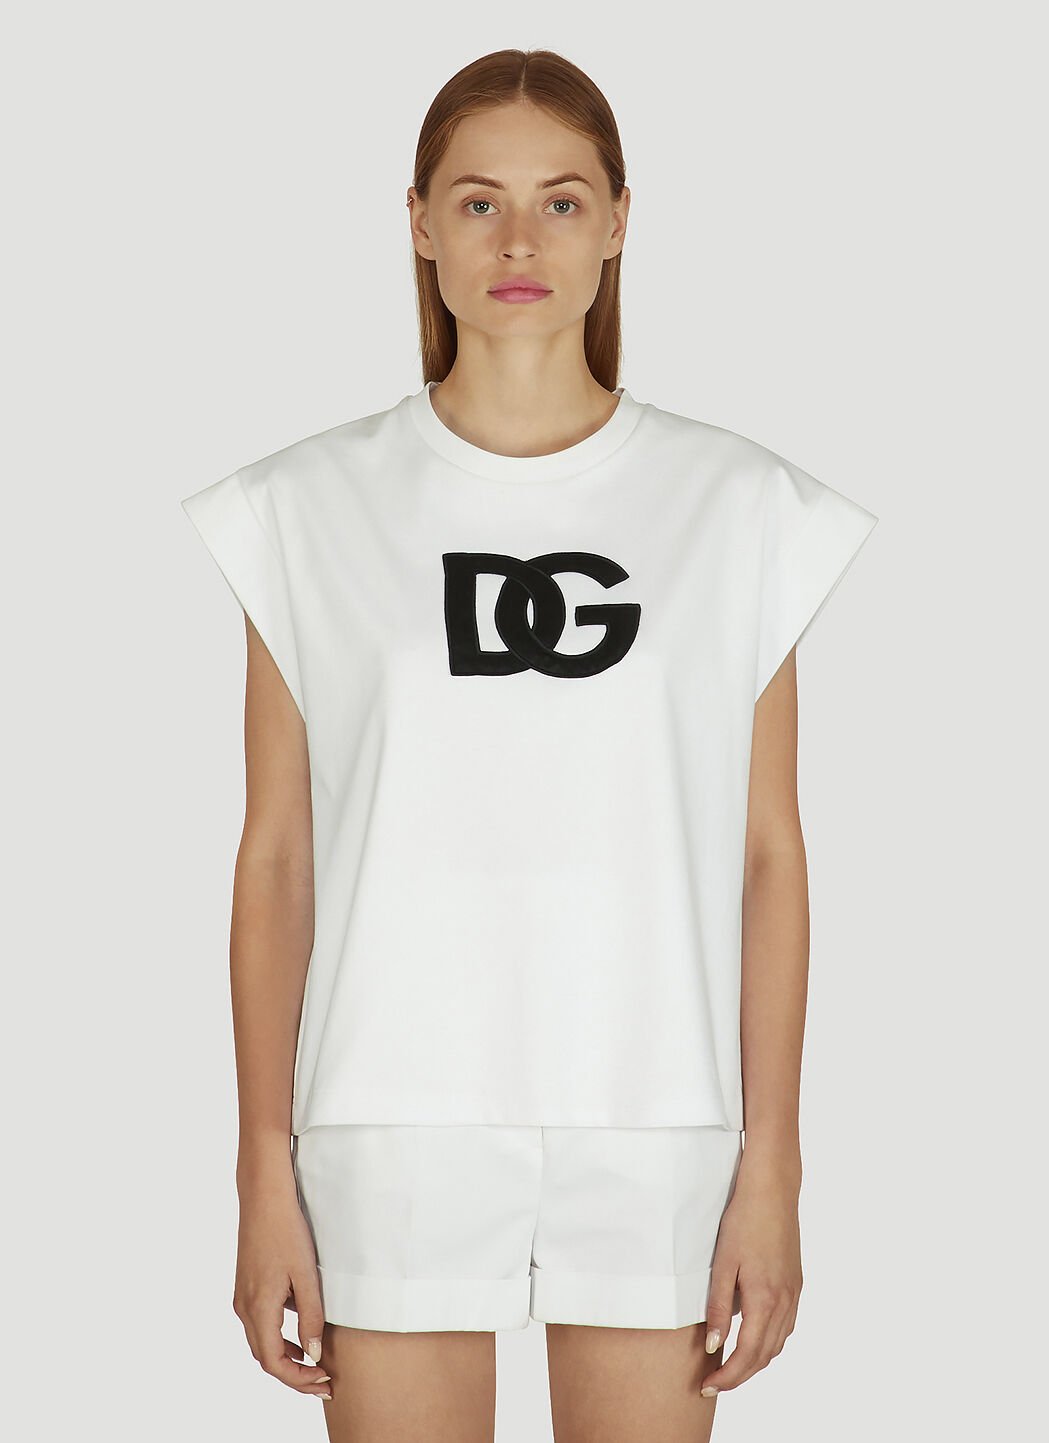 Gucci DG Logo T-Shirt White guc0257008